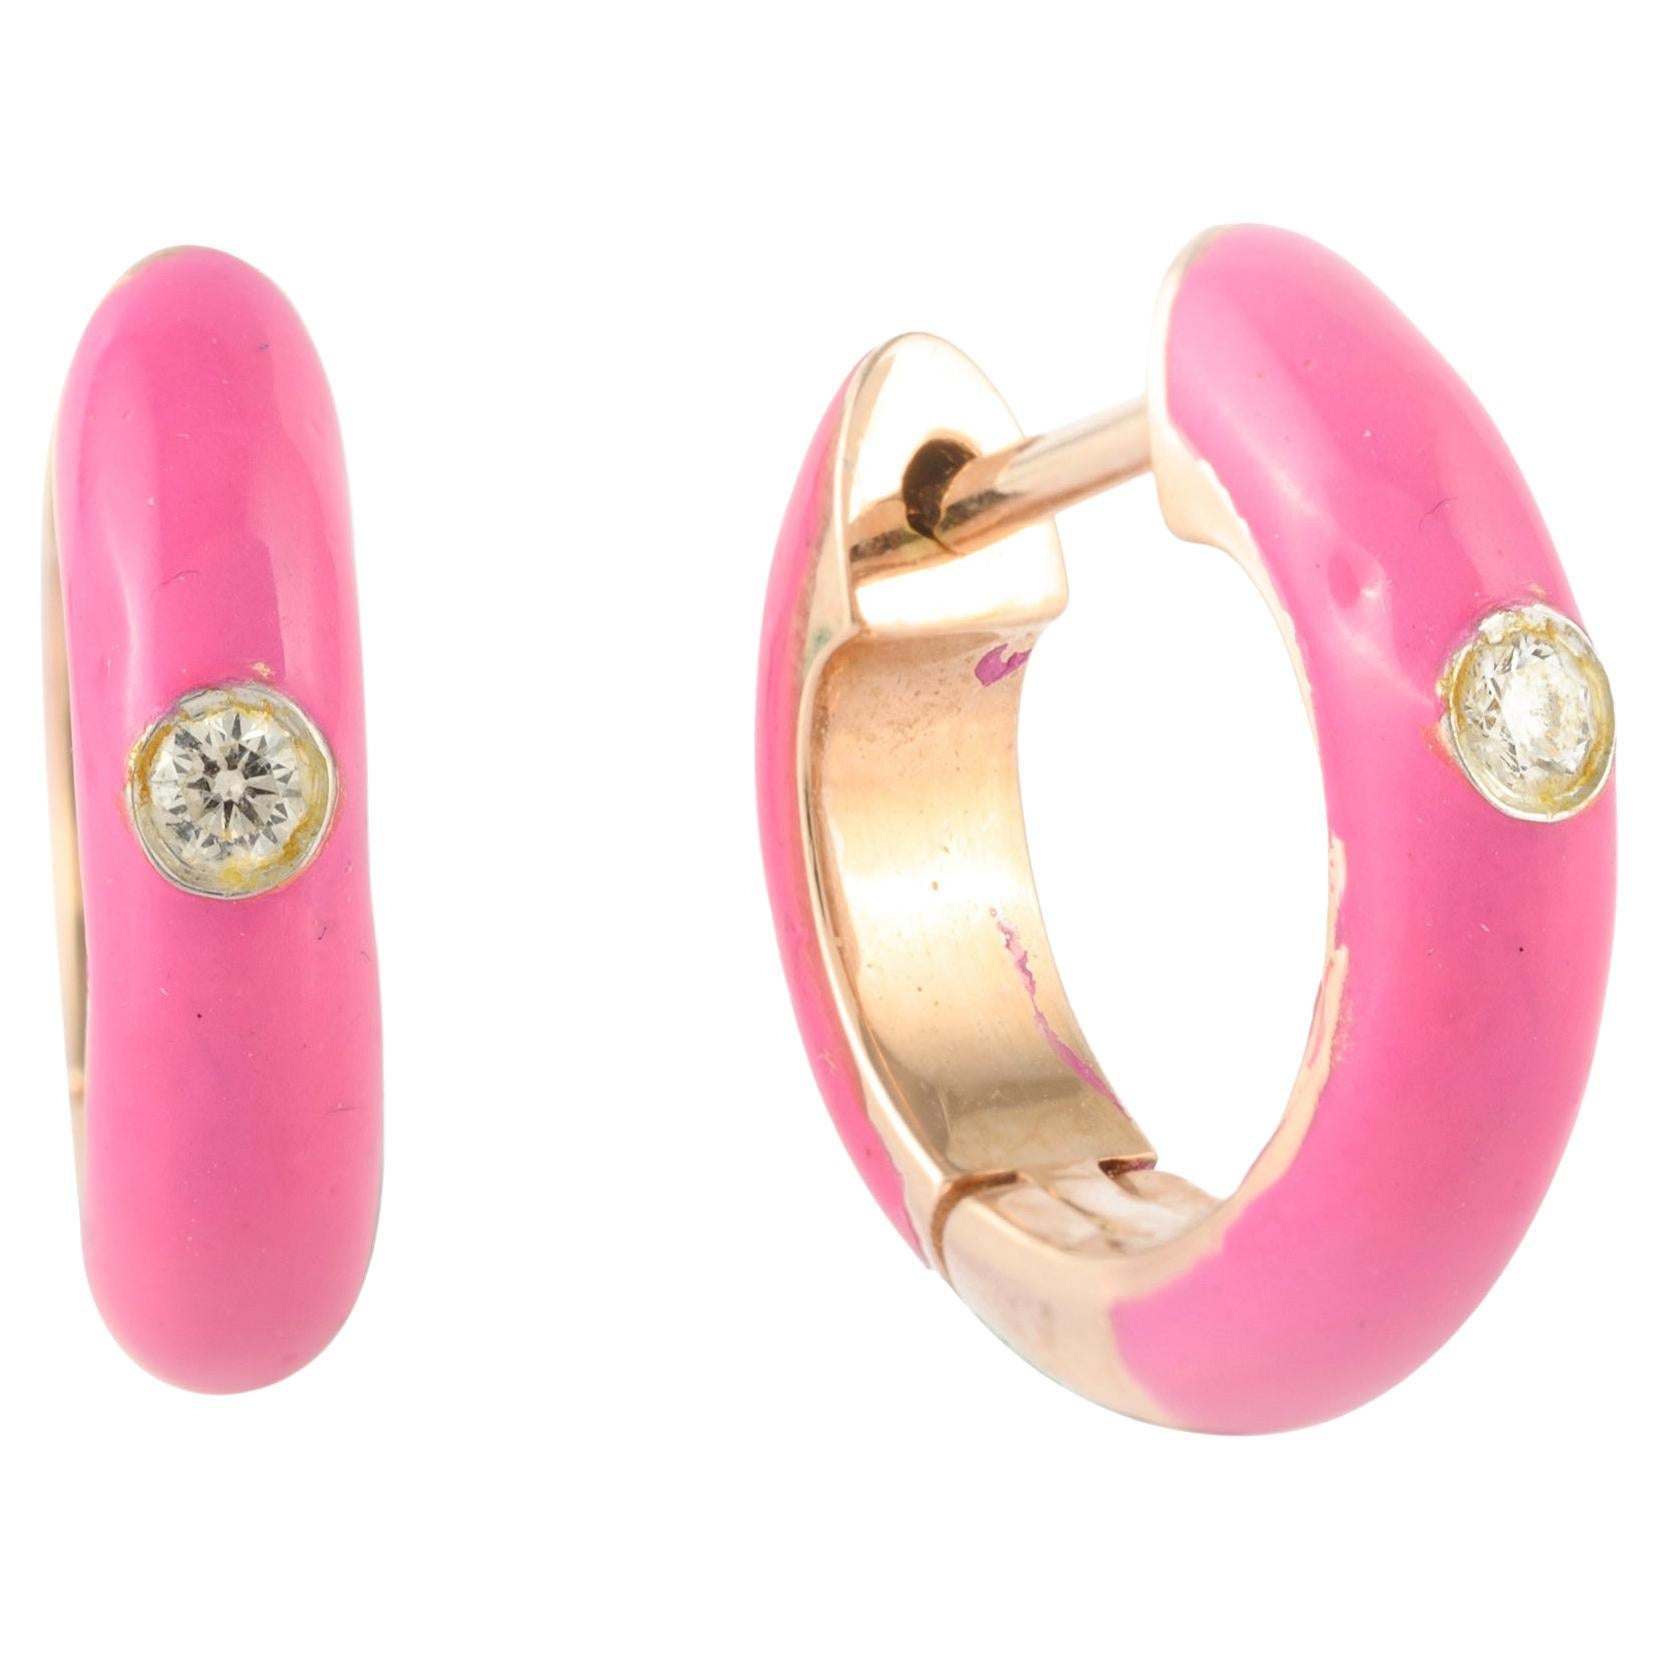 Moderne 14k solide Gelbgold rosa Emaille Clip-On Huggie Ohrringe mit Diamanten im Angebot